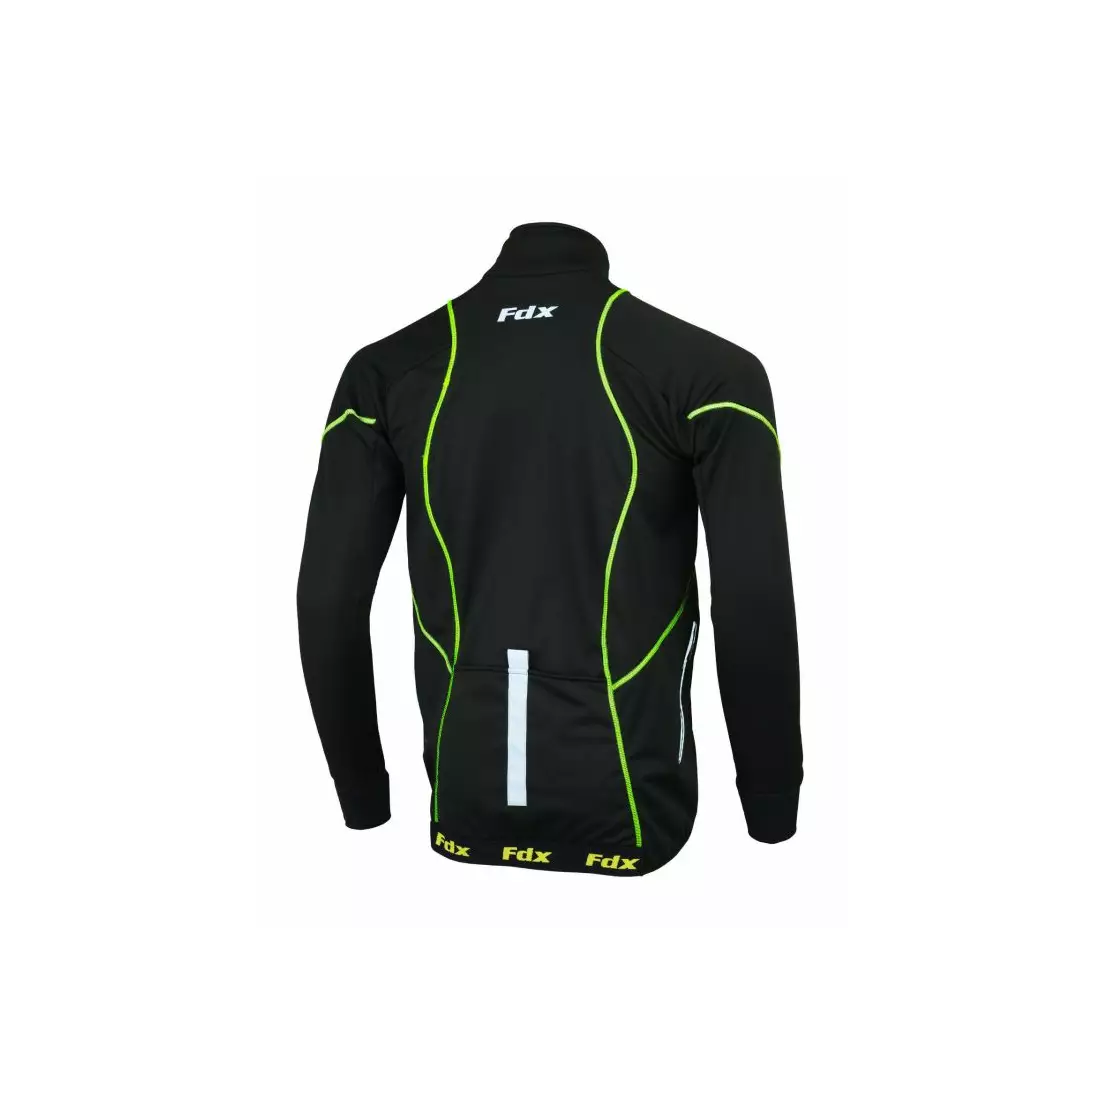 FDX 1300 Winter Cycling Jacket, Softshell, Black-Fluorine